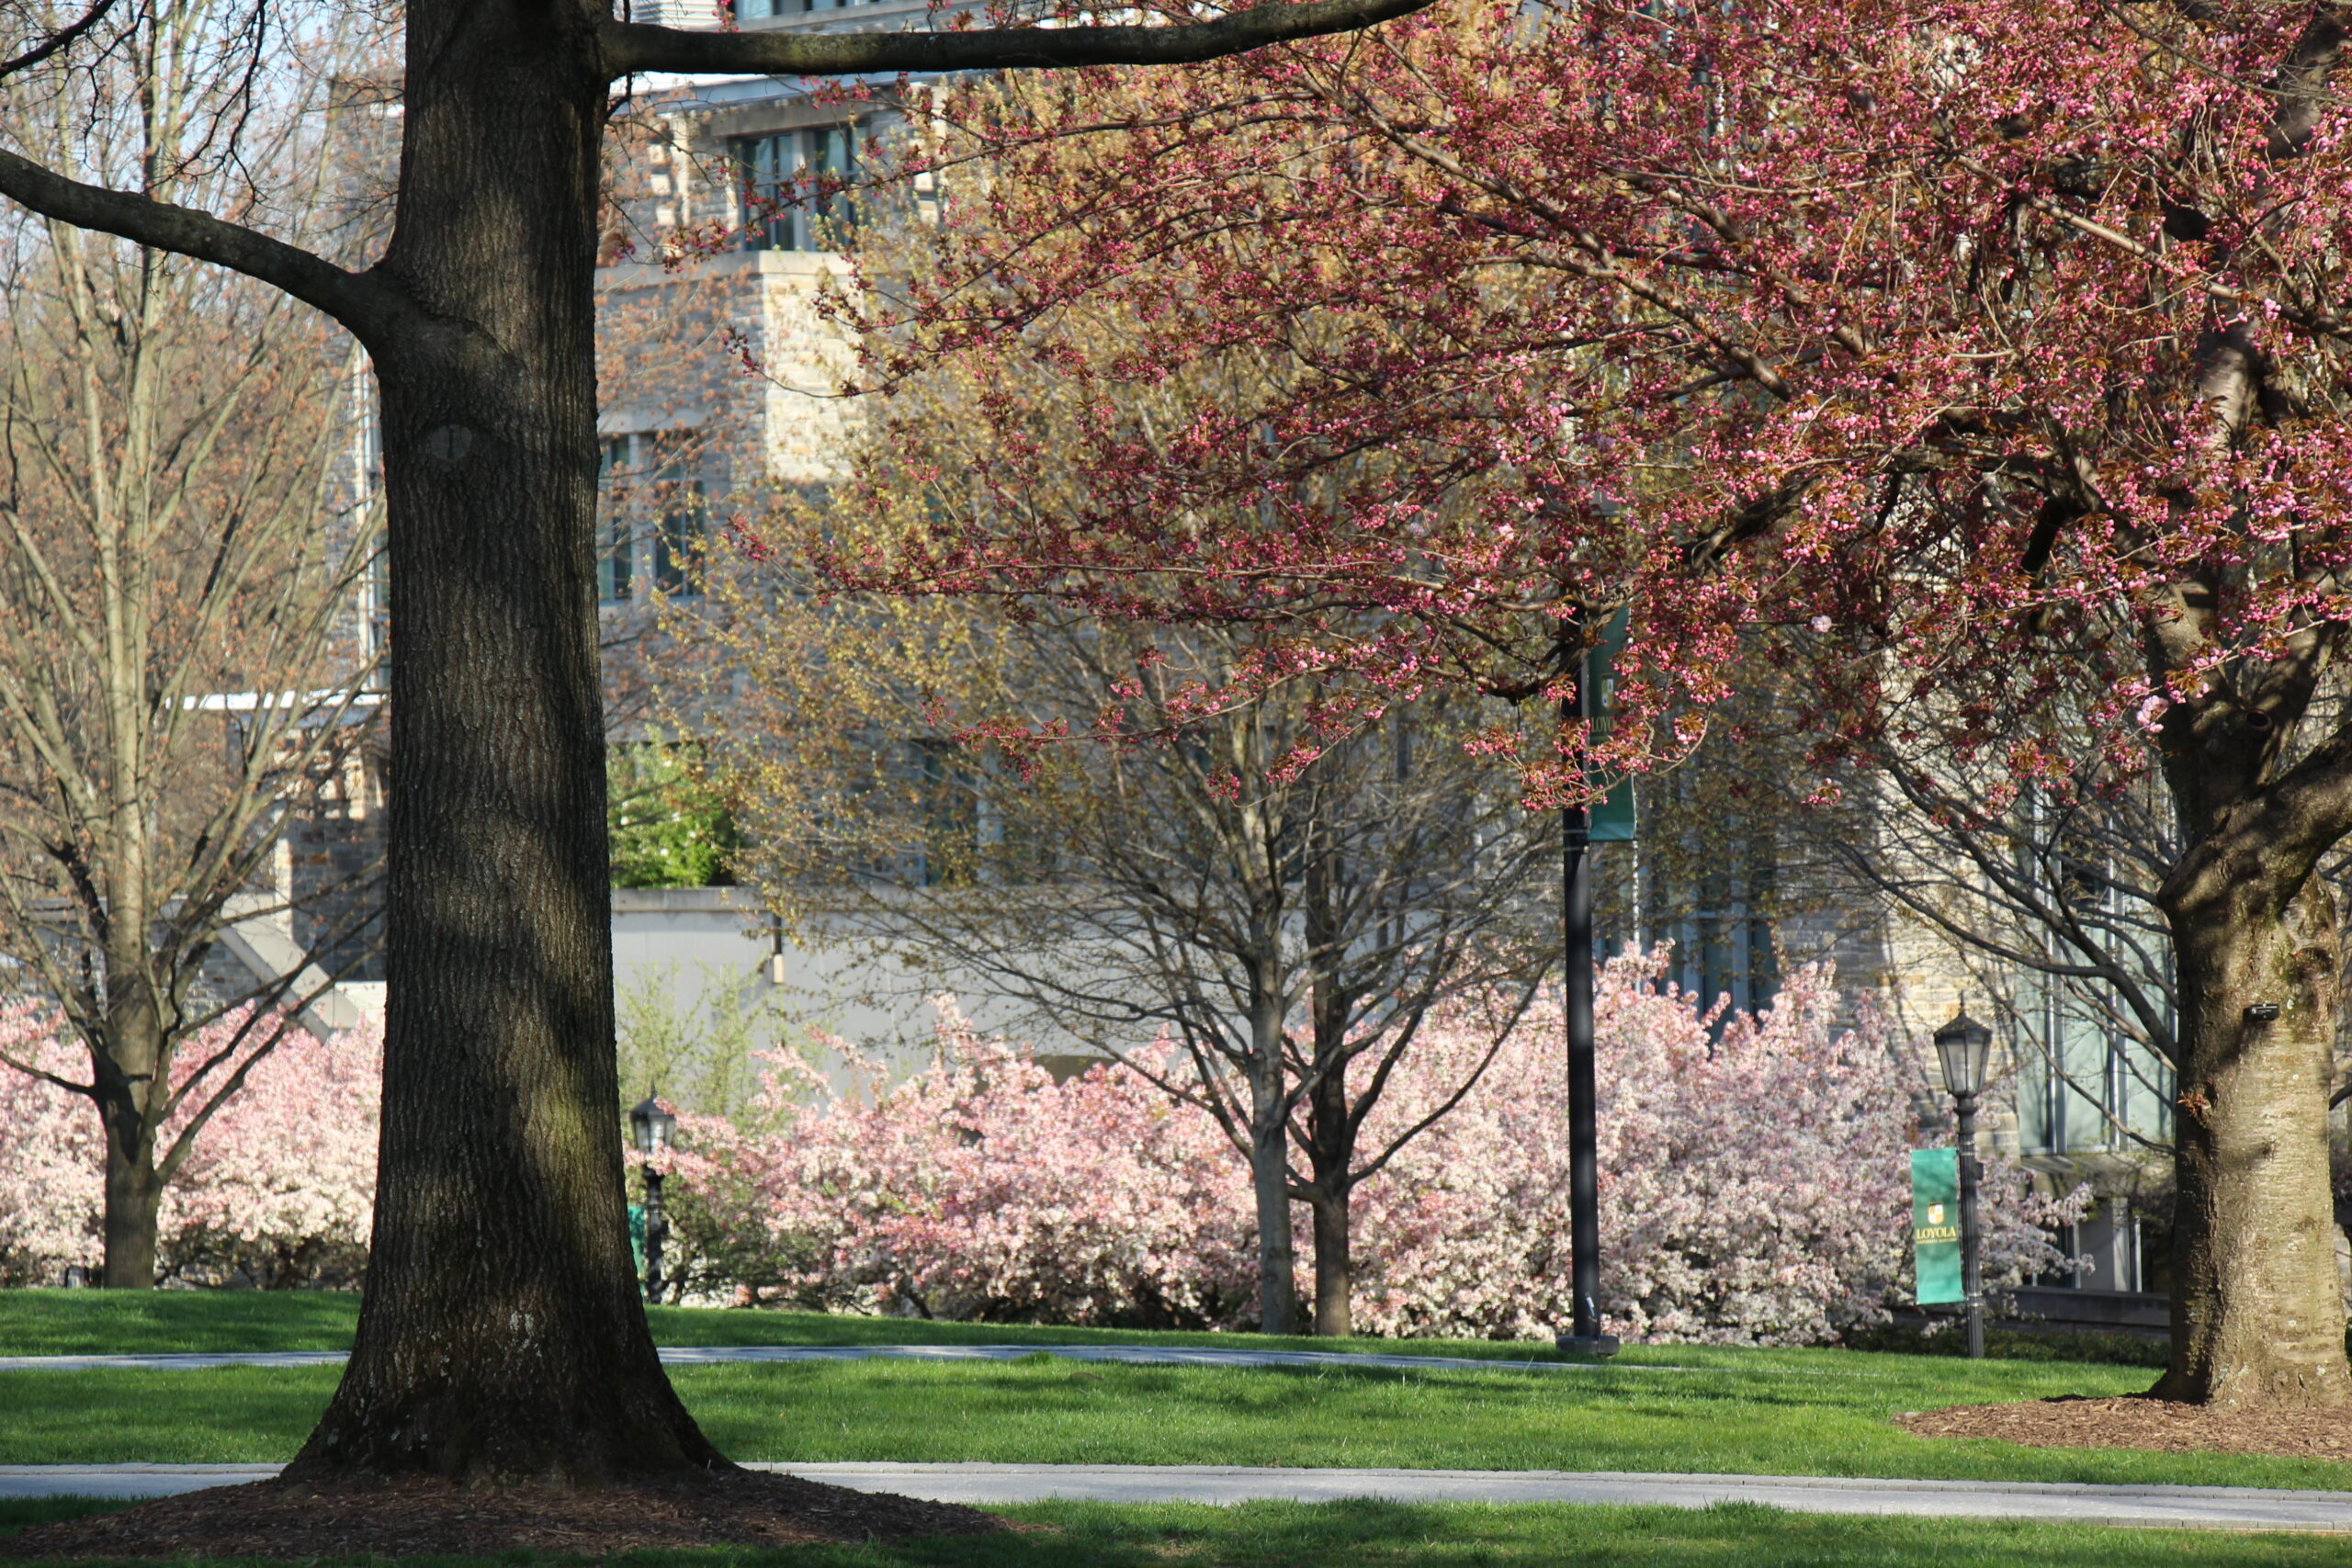 Flowering trees on Loyola's Quad.